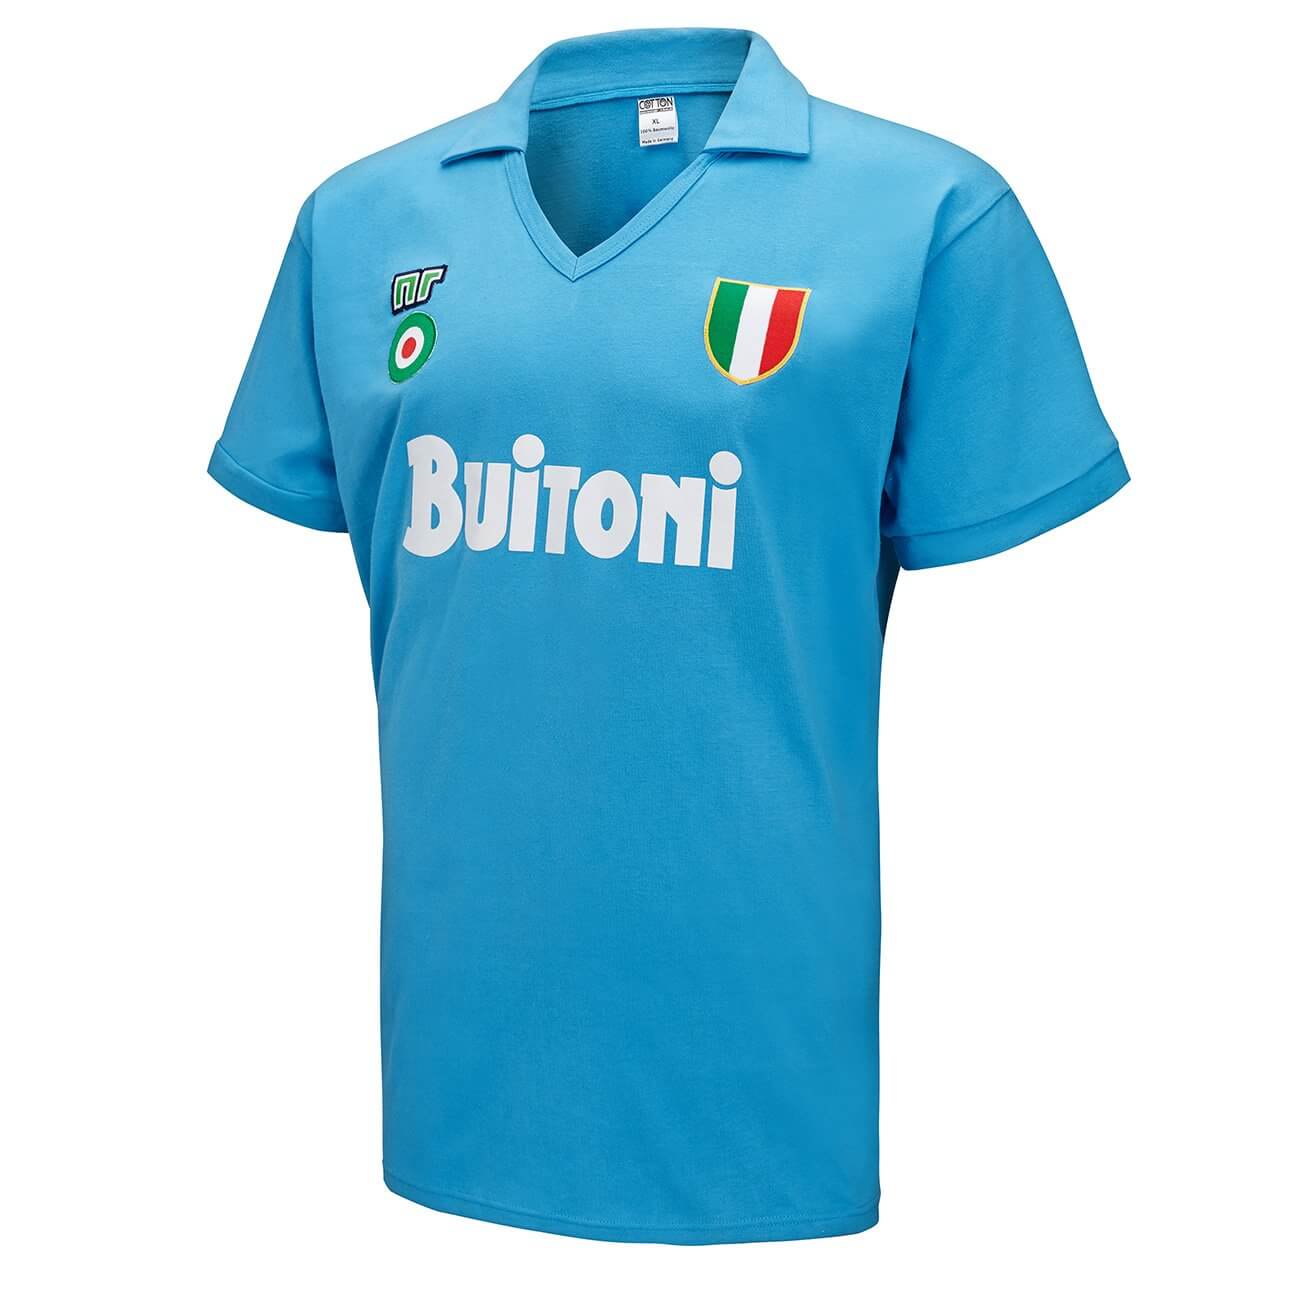 Napoli Maradona retro shirt 